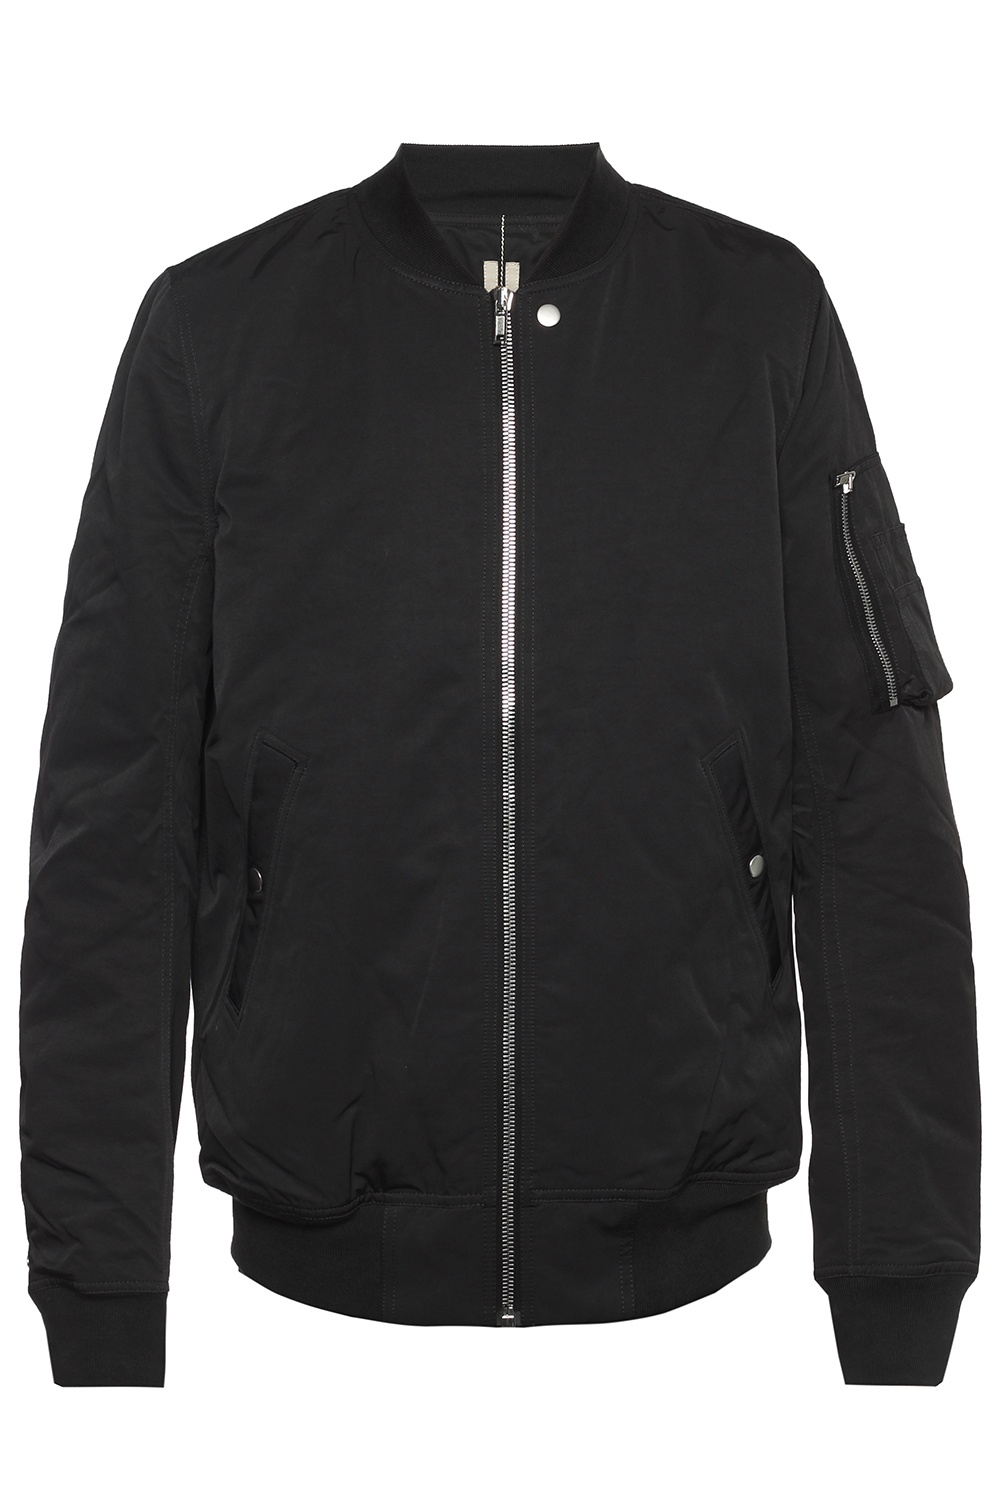 Rick Owens DRKSHDW Bomber jacket | Men's Clothing | Vitkac